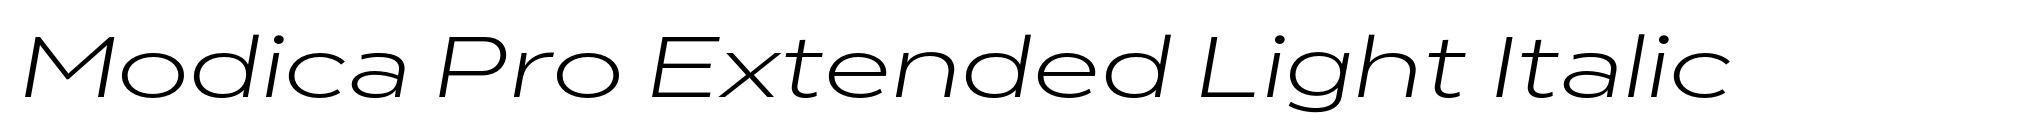 Modica Pro Extended Light Italic image